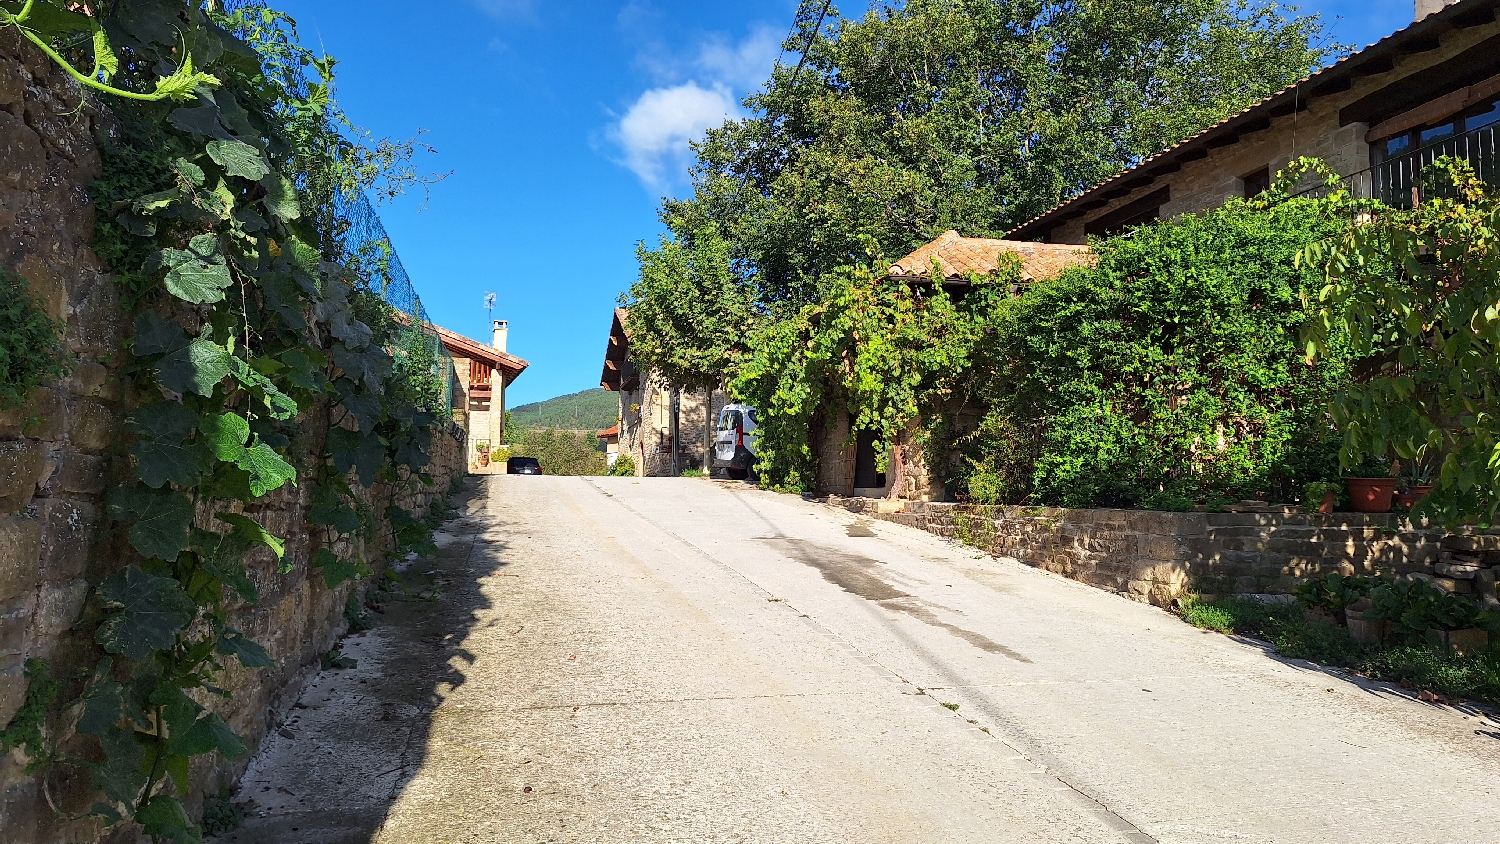 El Camino, Aragon út, egy picike falu előtt balra kell kanyarodni